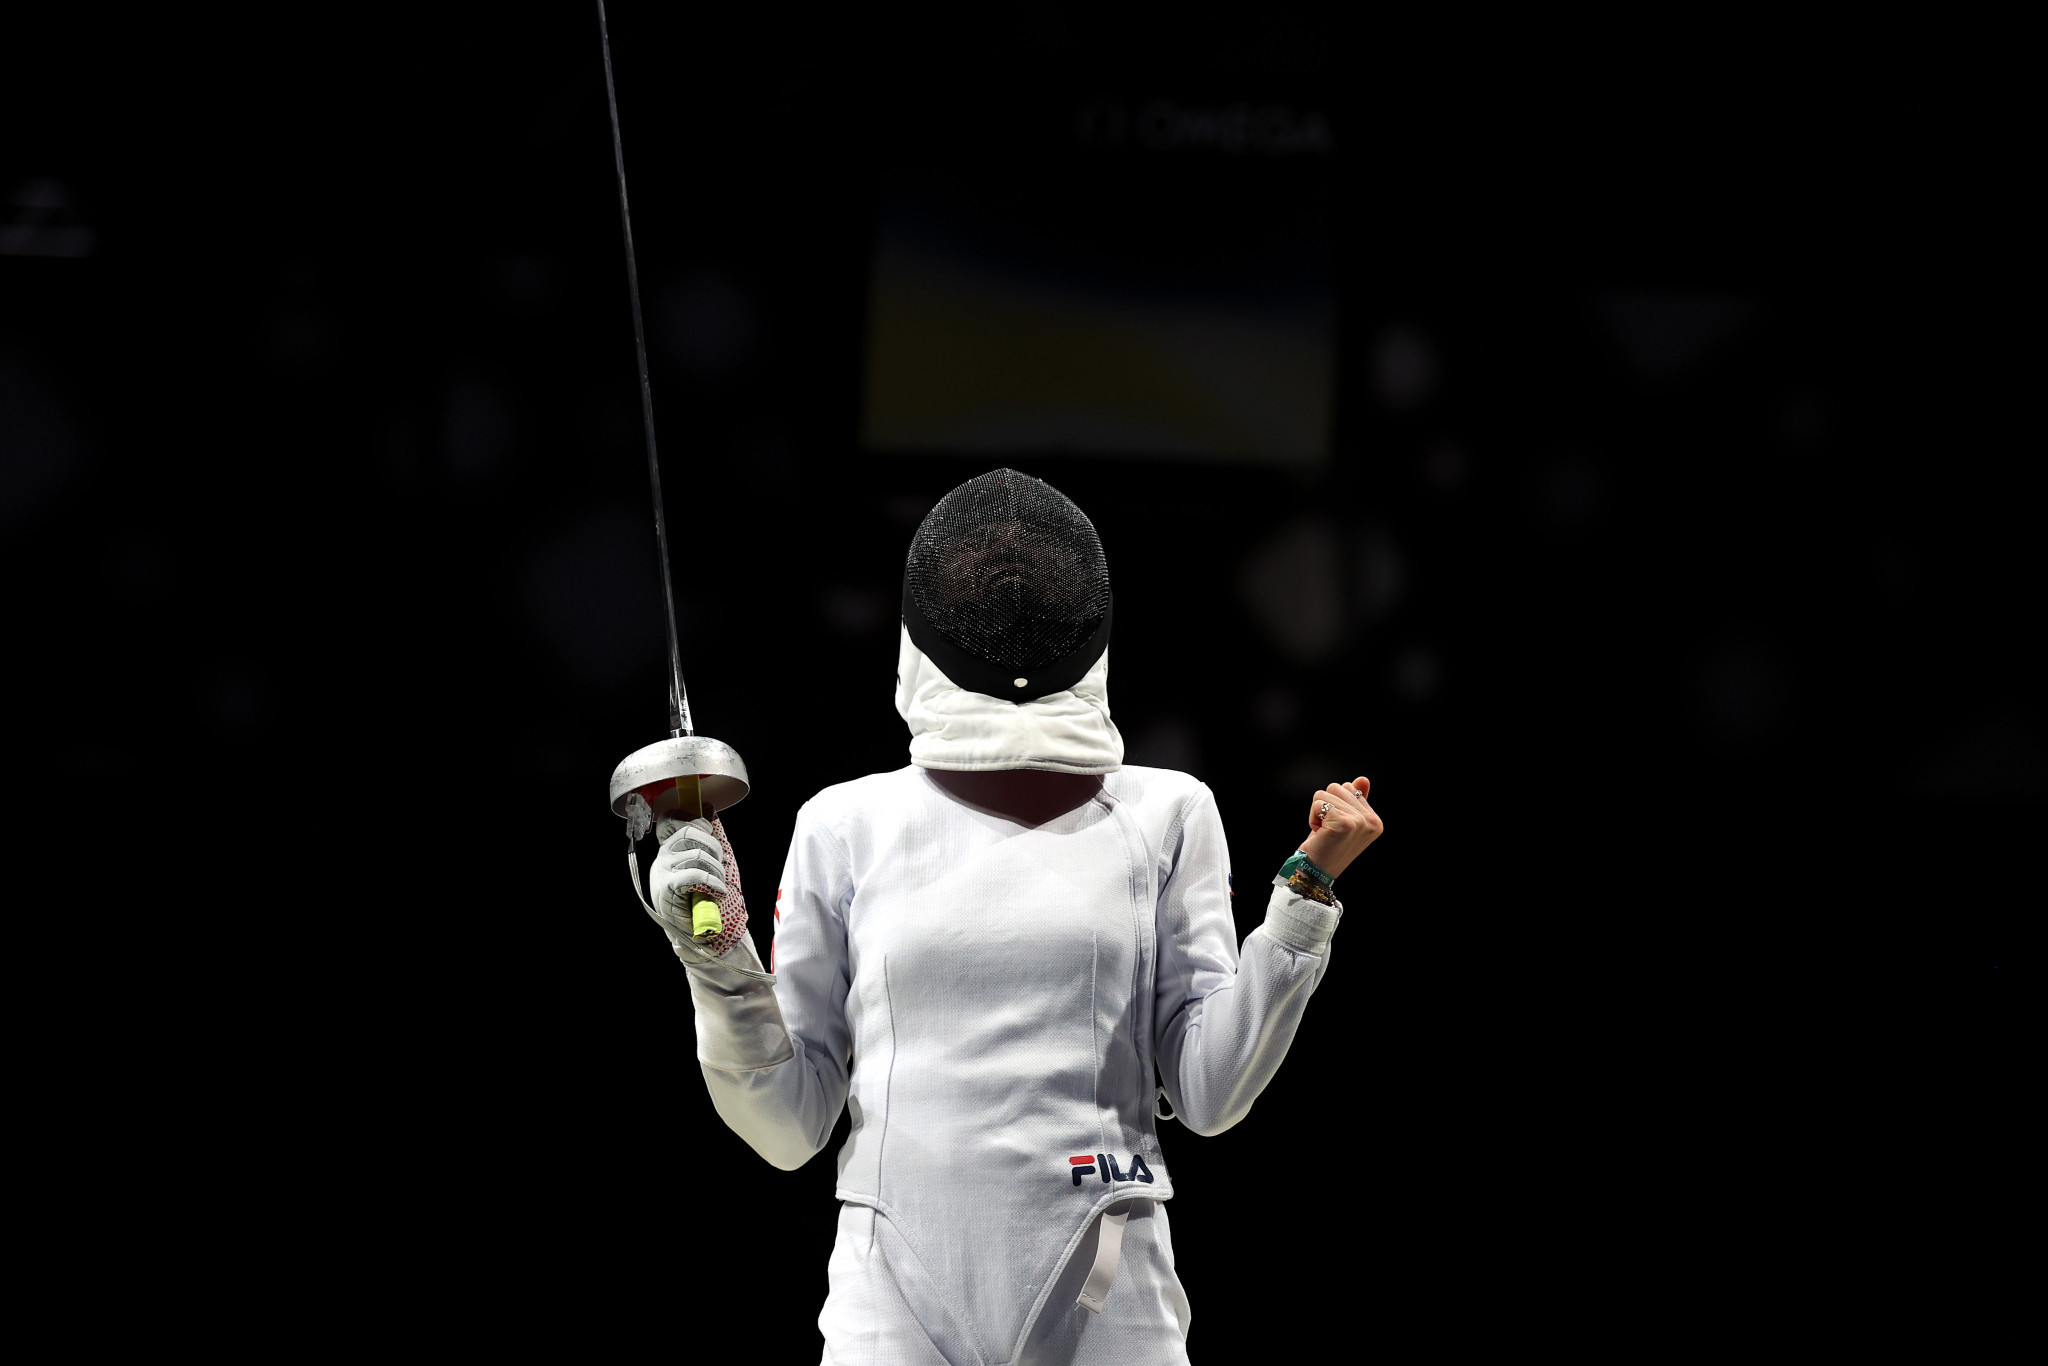 Olympic and Universiade fencing silver medallist Choi endorses Chungcheong 2027 bid